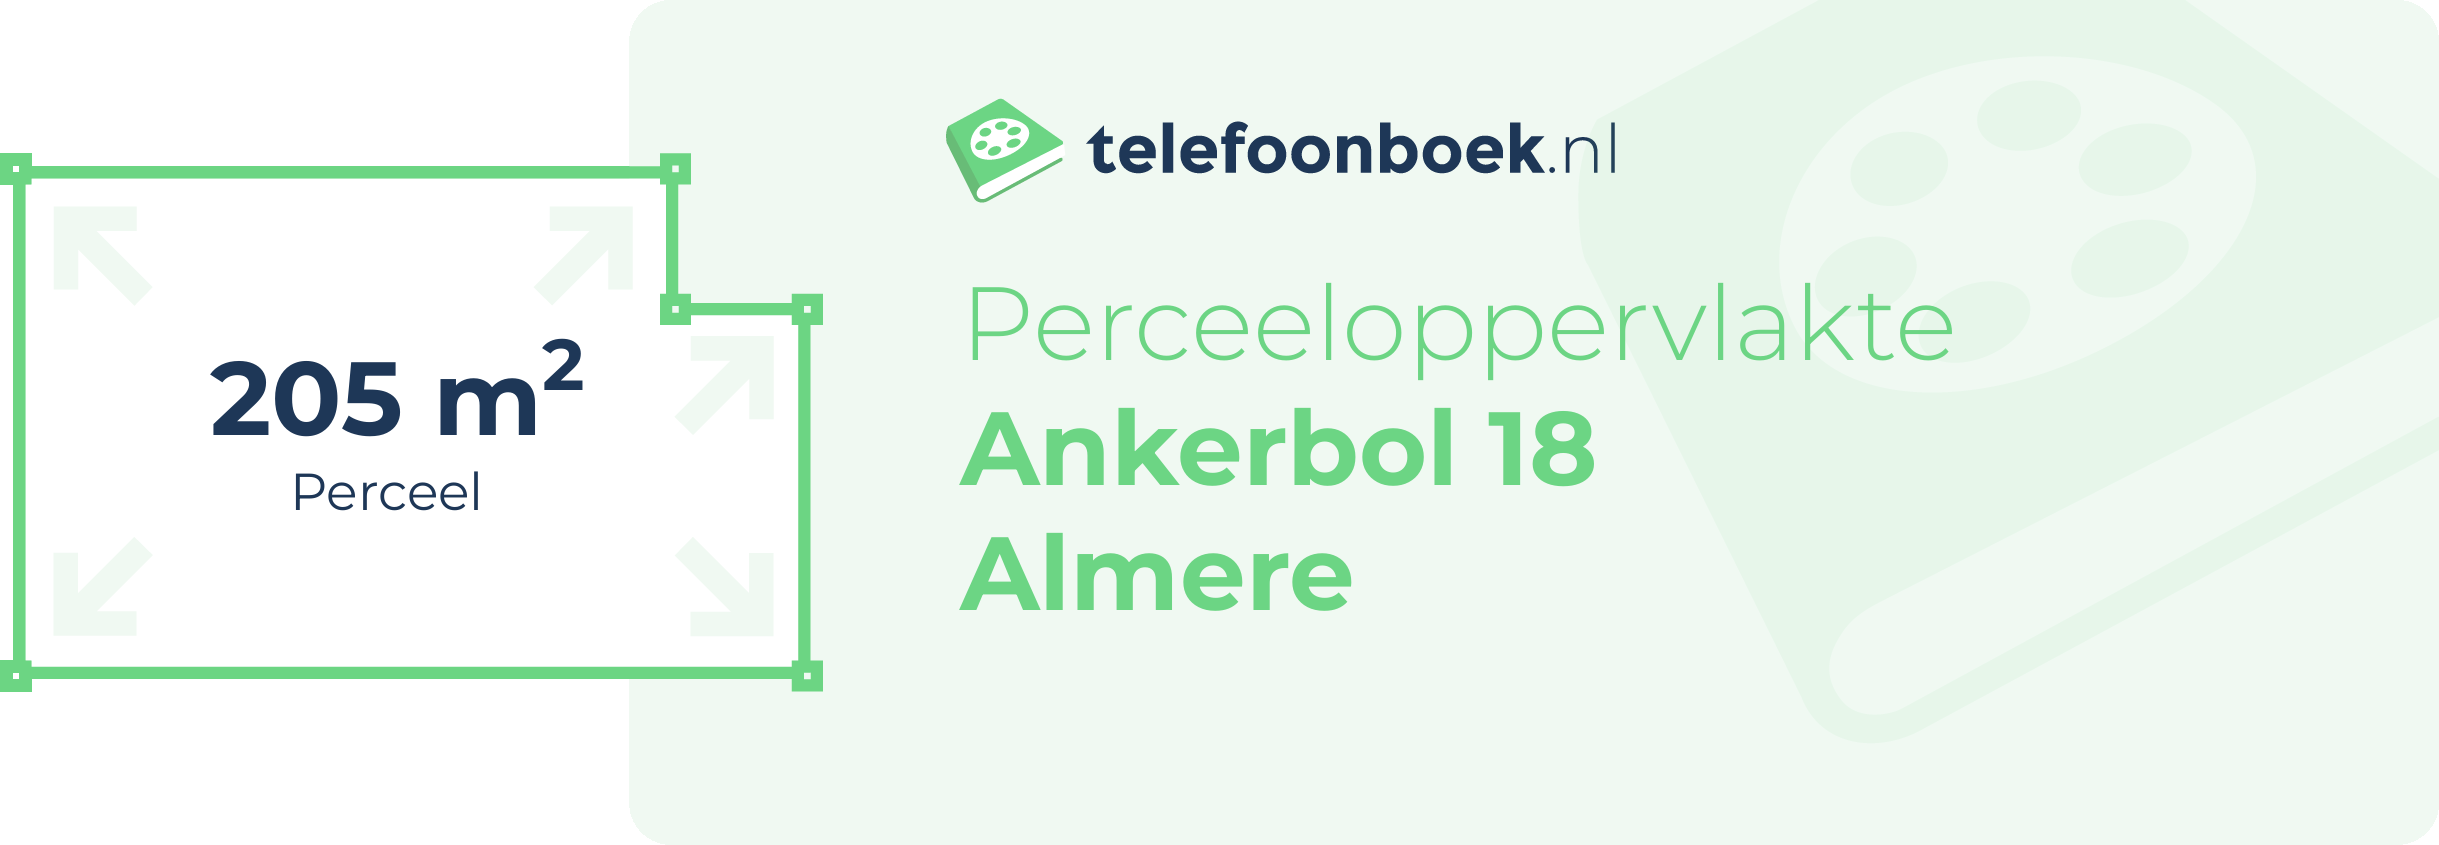 Perceeloppervlakte Ankerbol 18 Almere